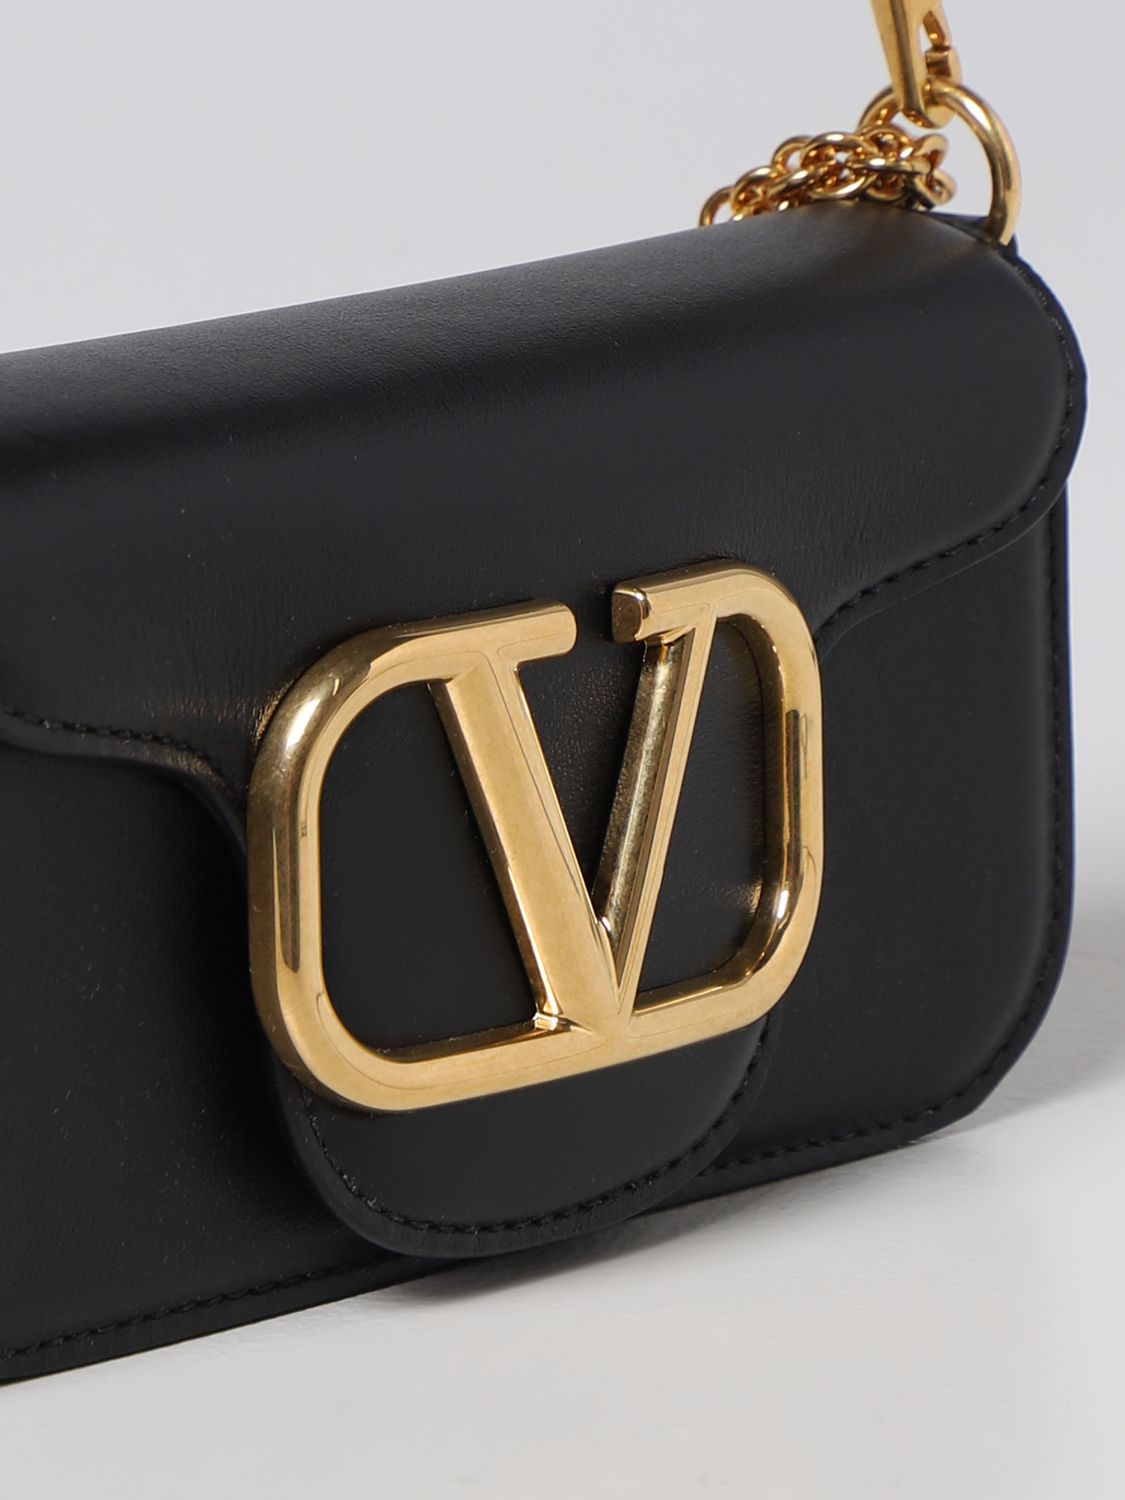 VALENTINO GARAVANI: Locò smooth leather bag - Black | Valentino ...